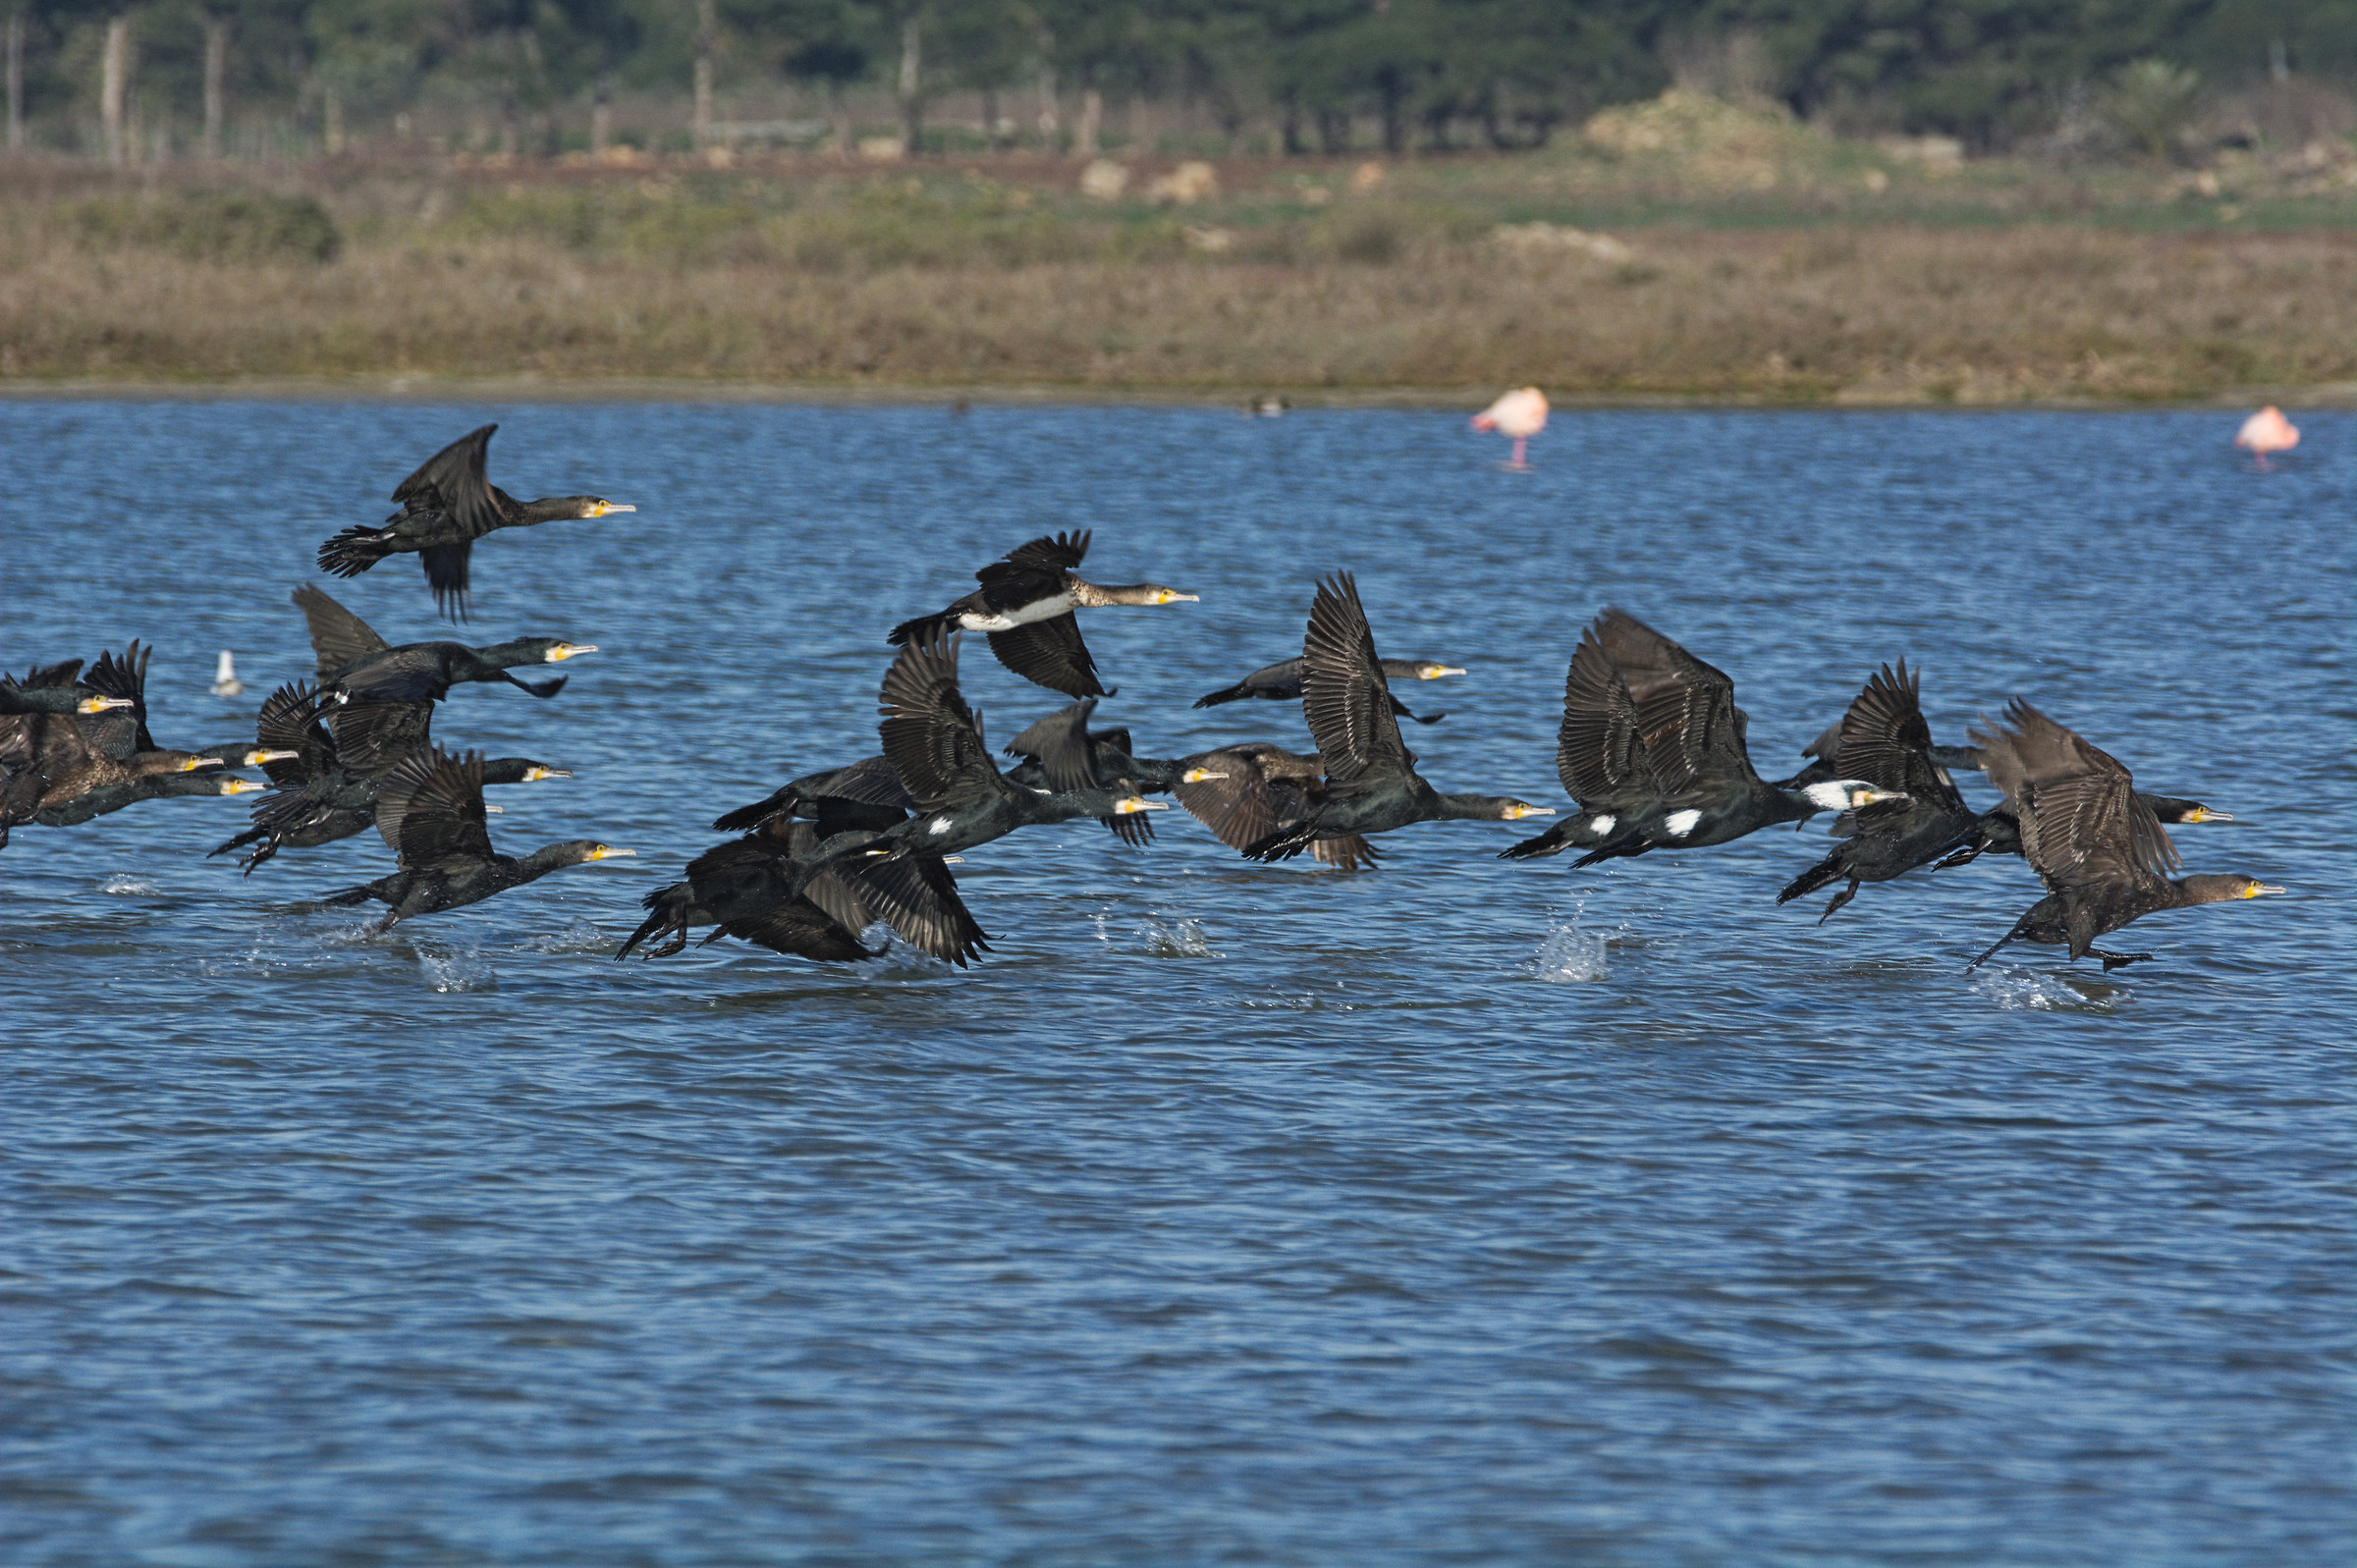 the flight of cormorants...